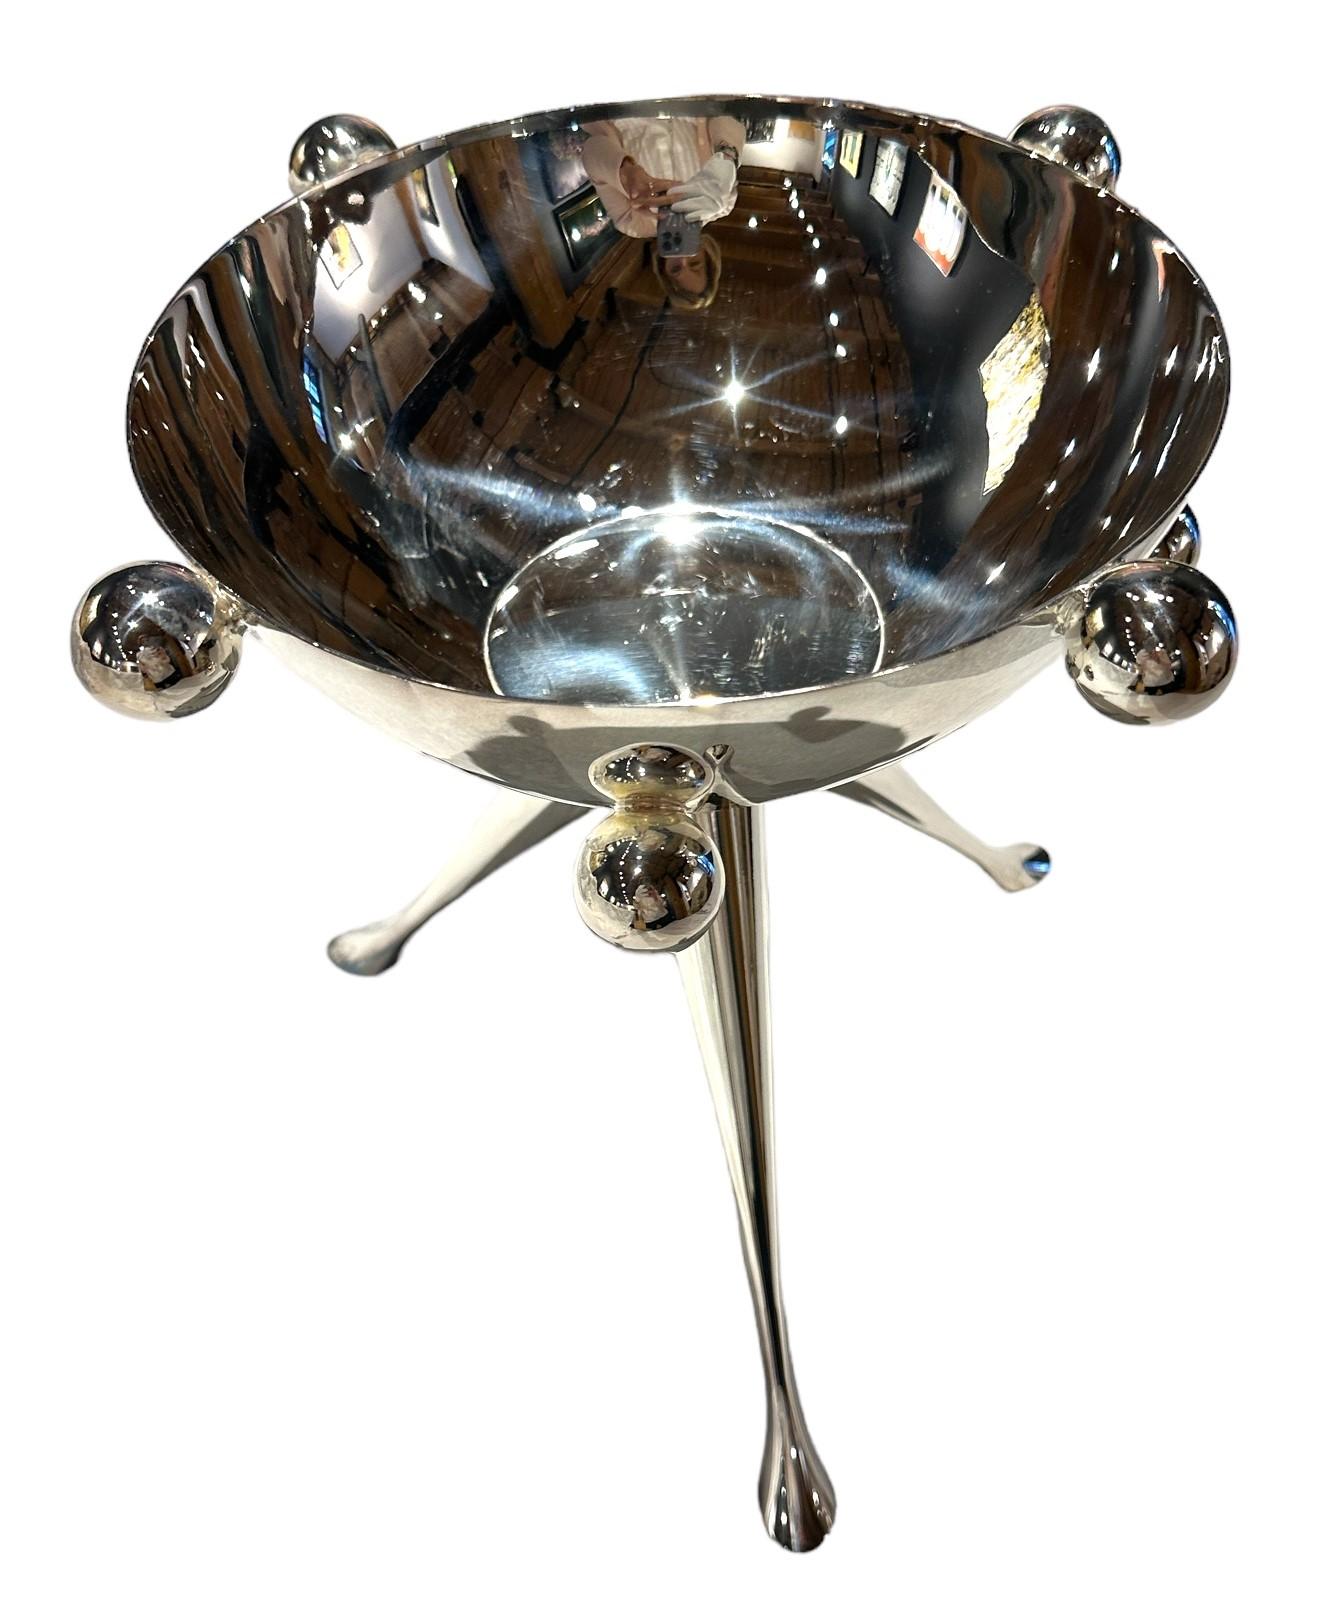 Italian Multifunctional Silver Vessel, Sculptural Object by Raju Peddada - 